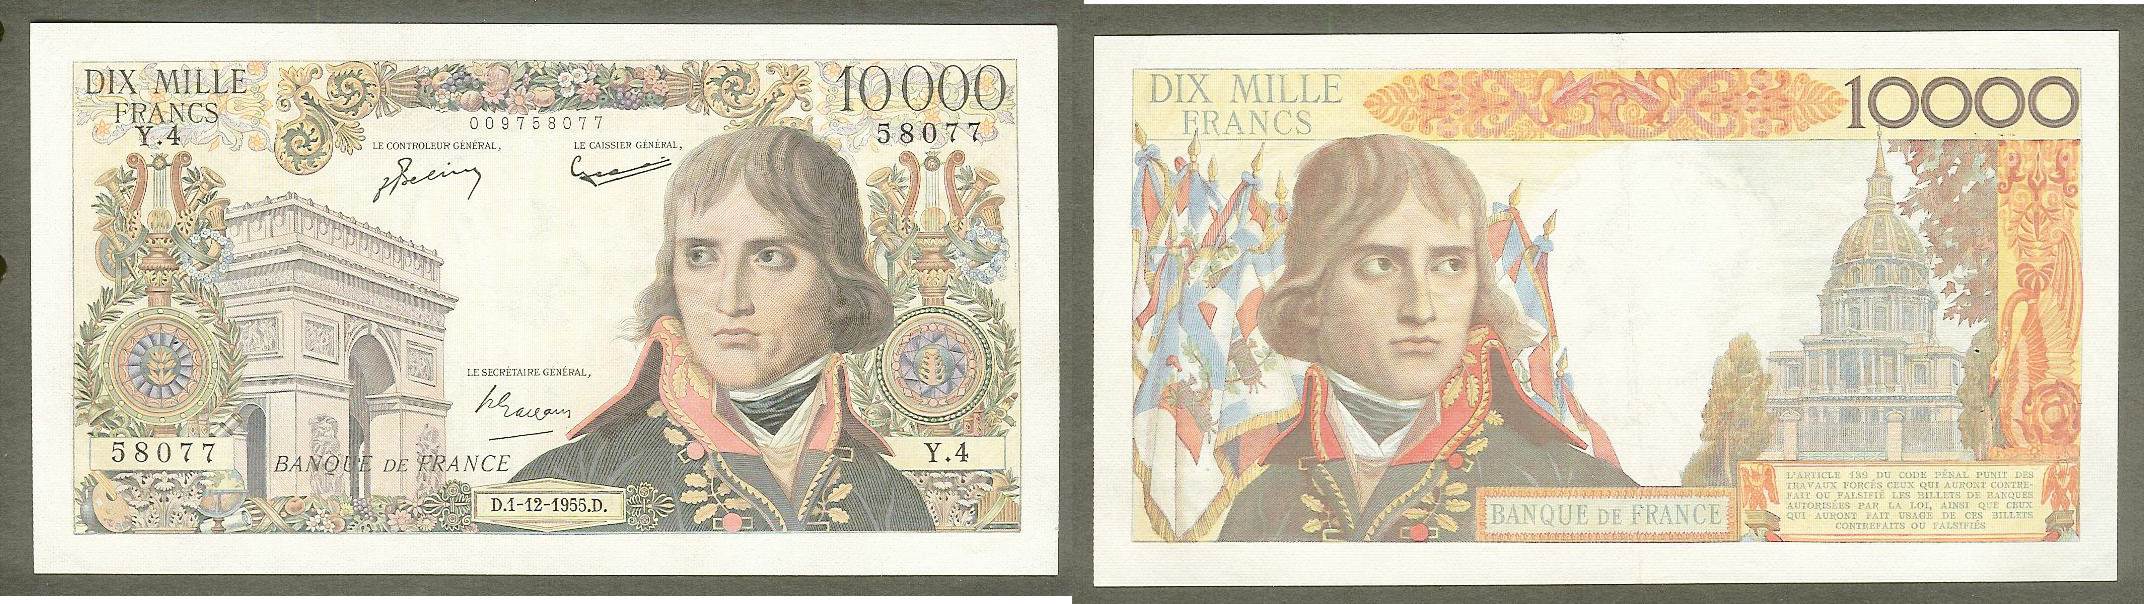 10000 Francs BONAPARTE FRANCE 1.12.1955 TTB++